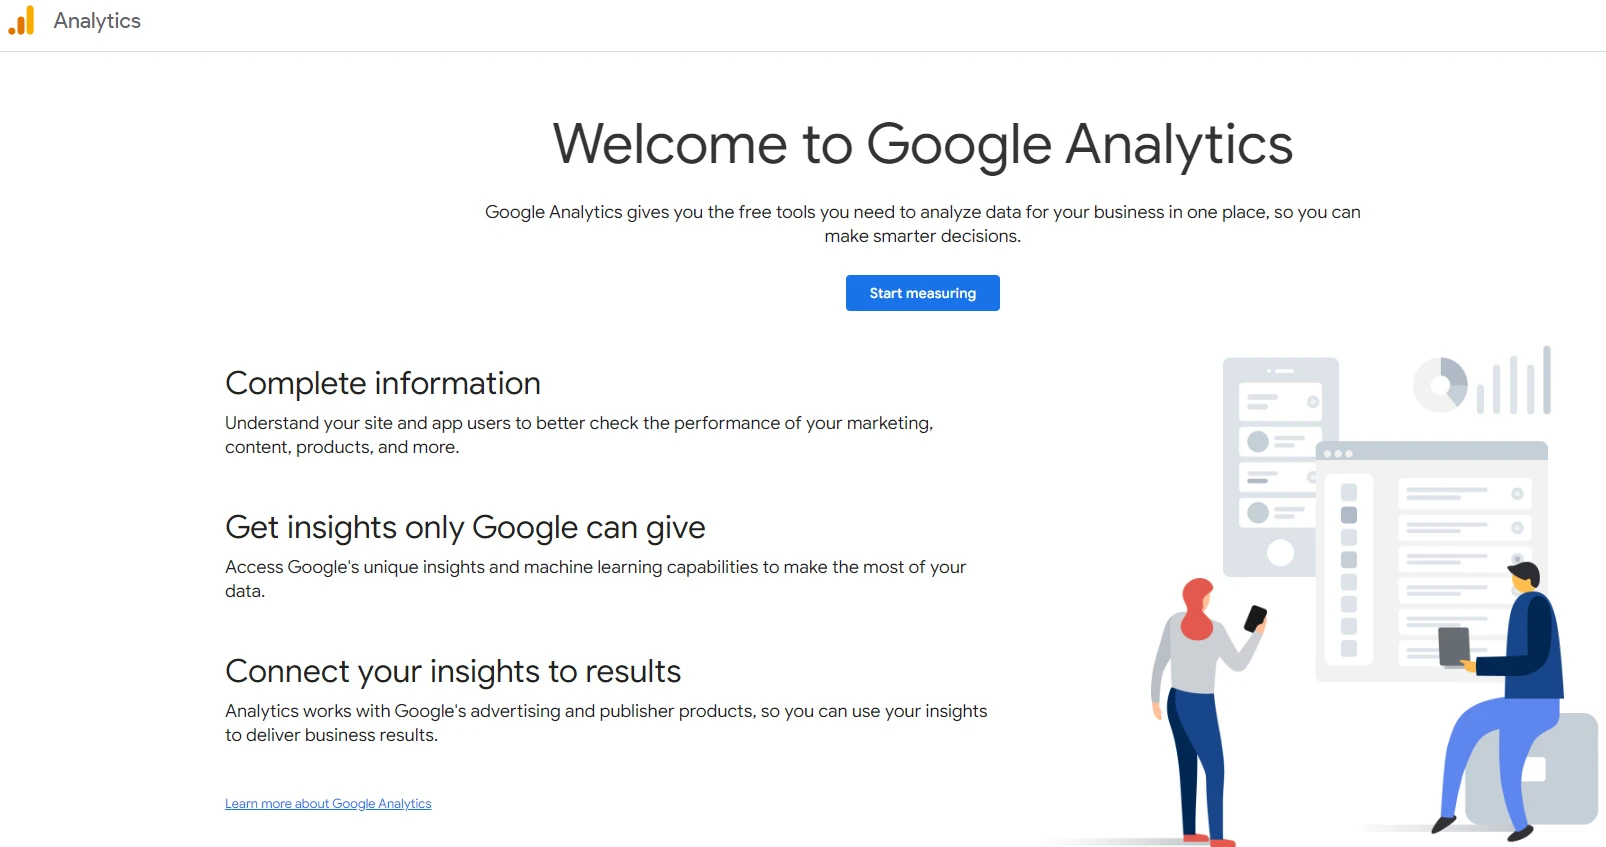 Google Analytics Tool